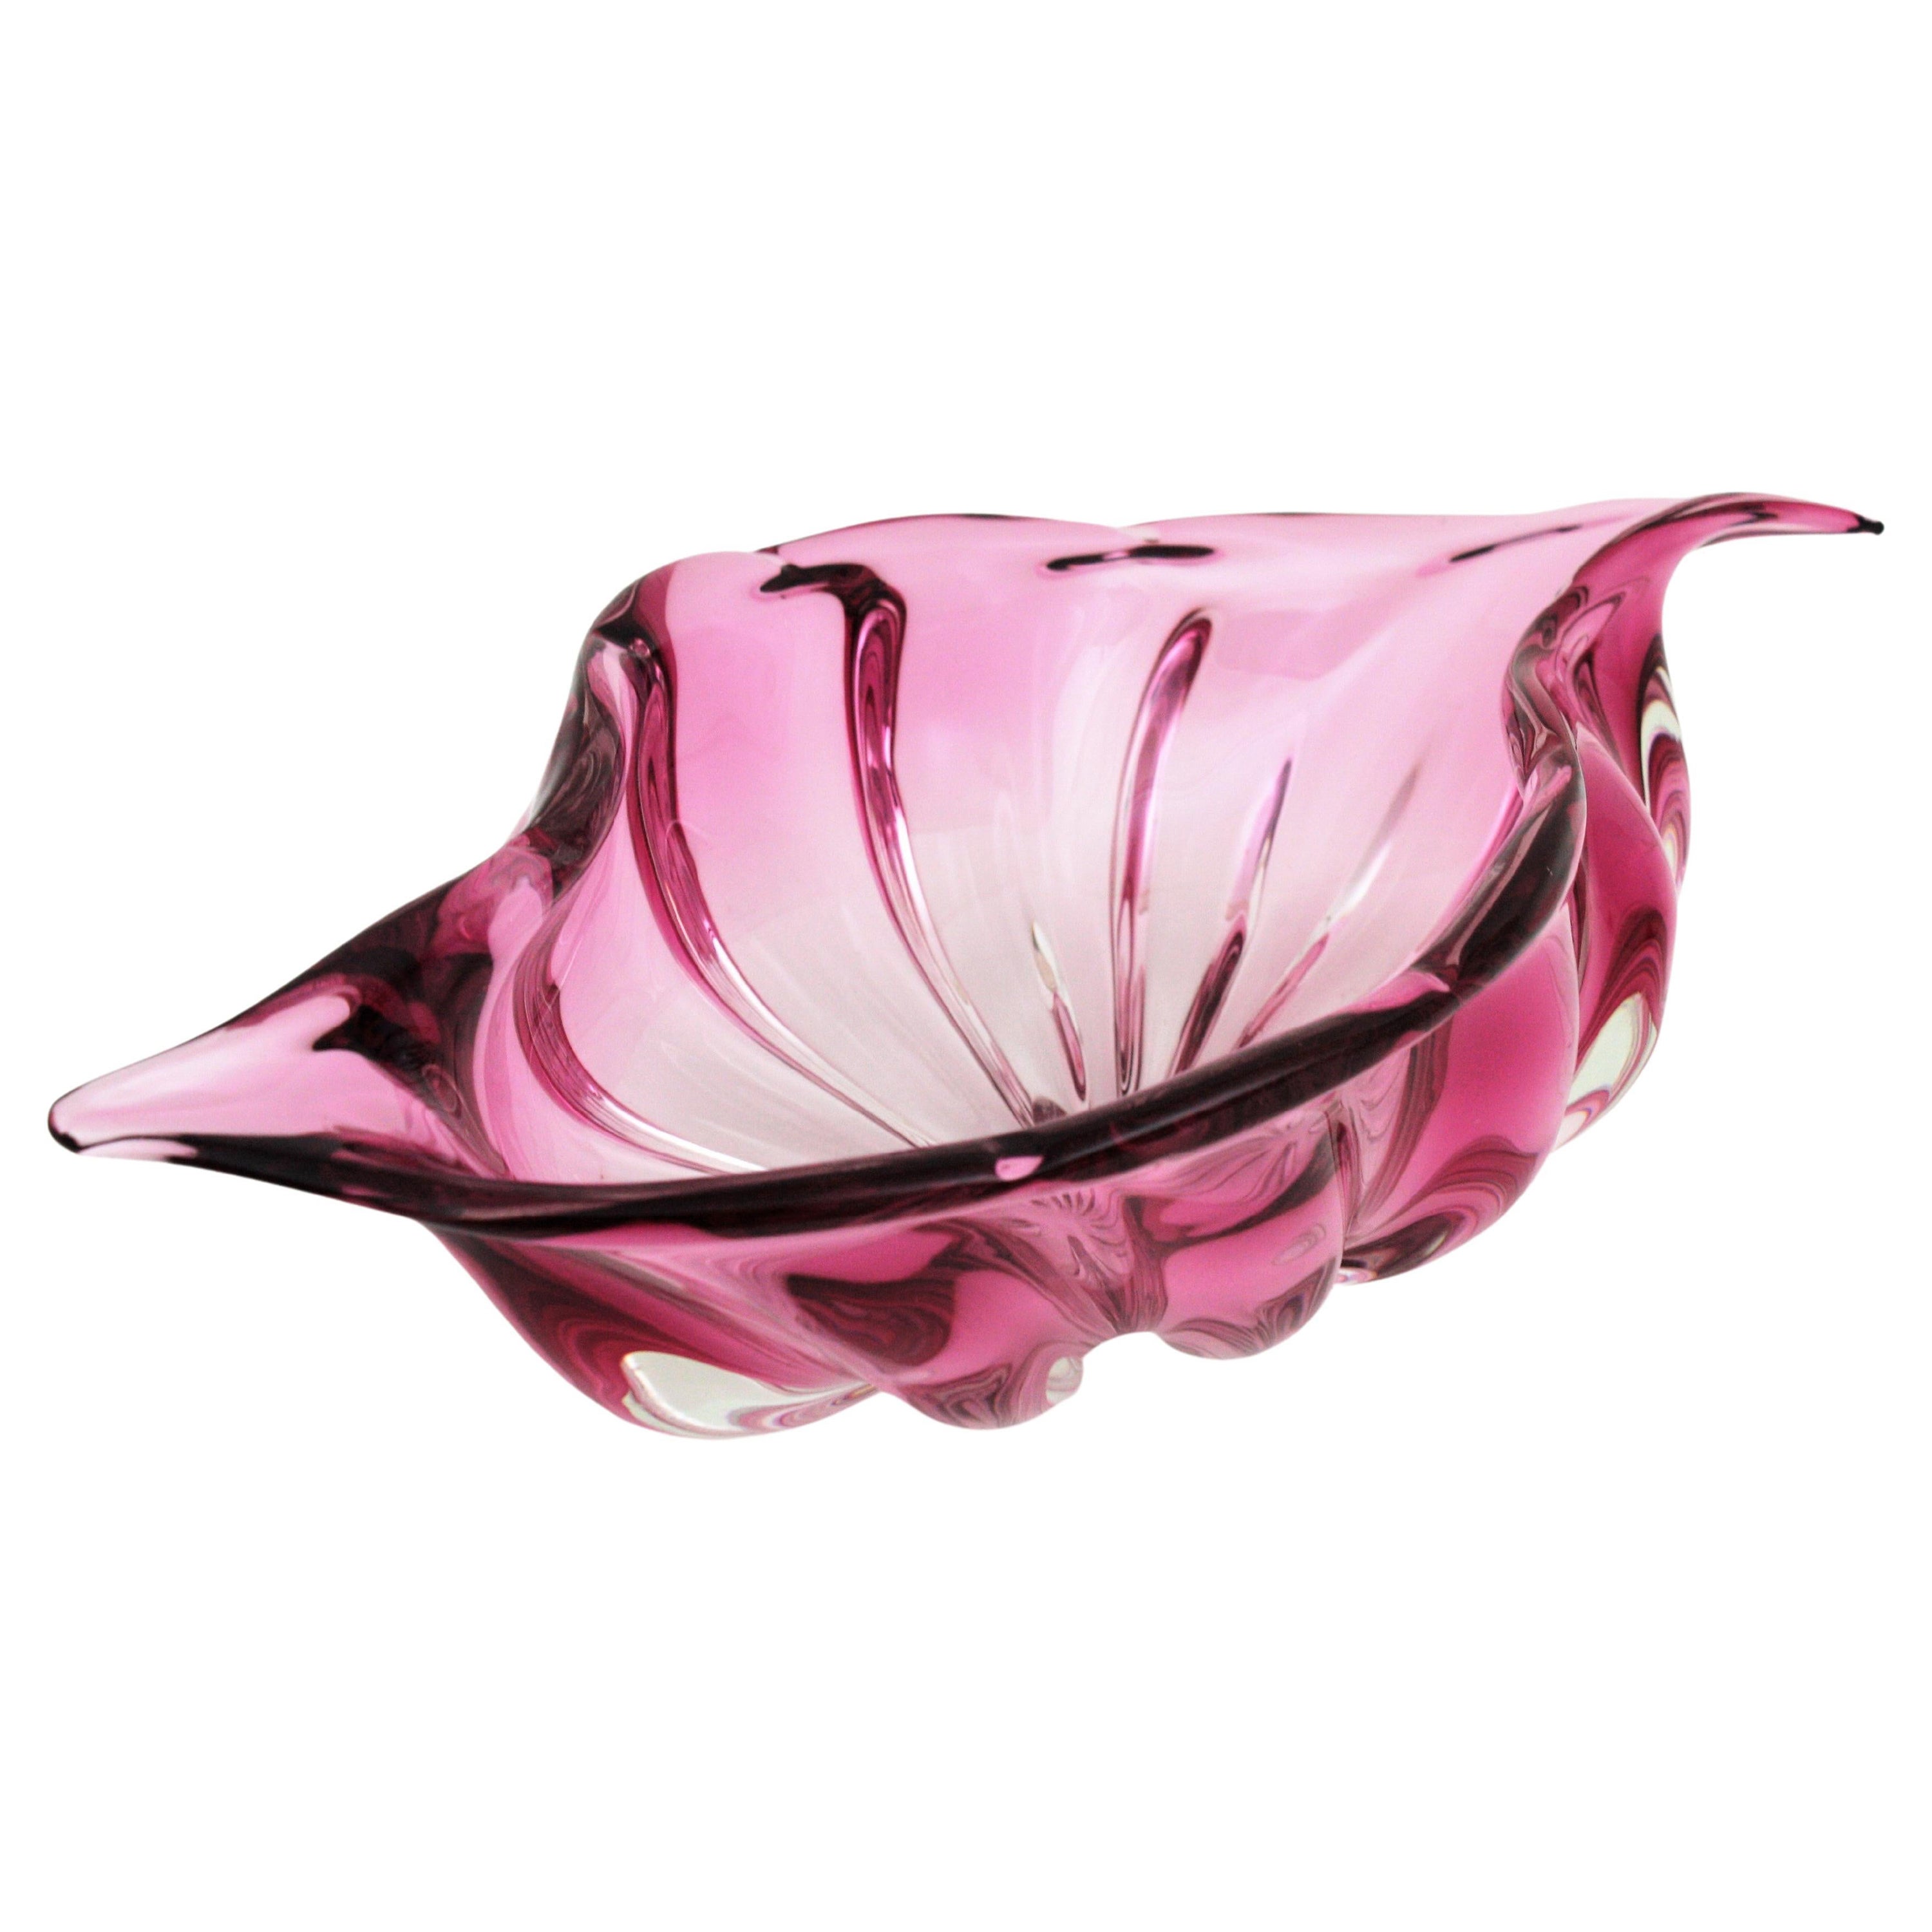 Alfredo Barbini Murano Sommerso Pink Art Glass Centerpiece Decorative Bowl For Sale